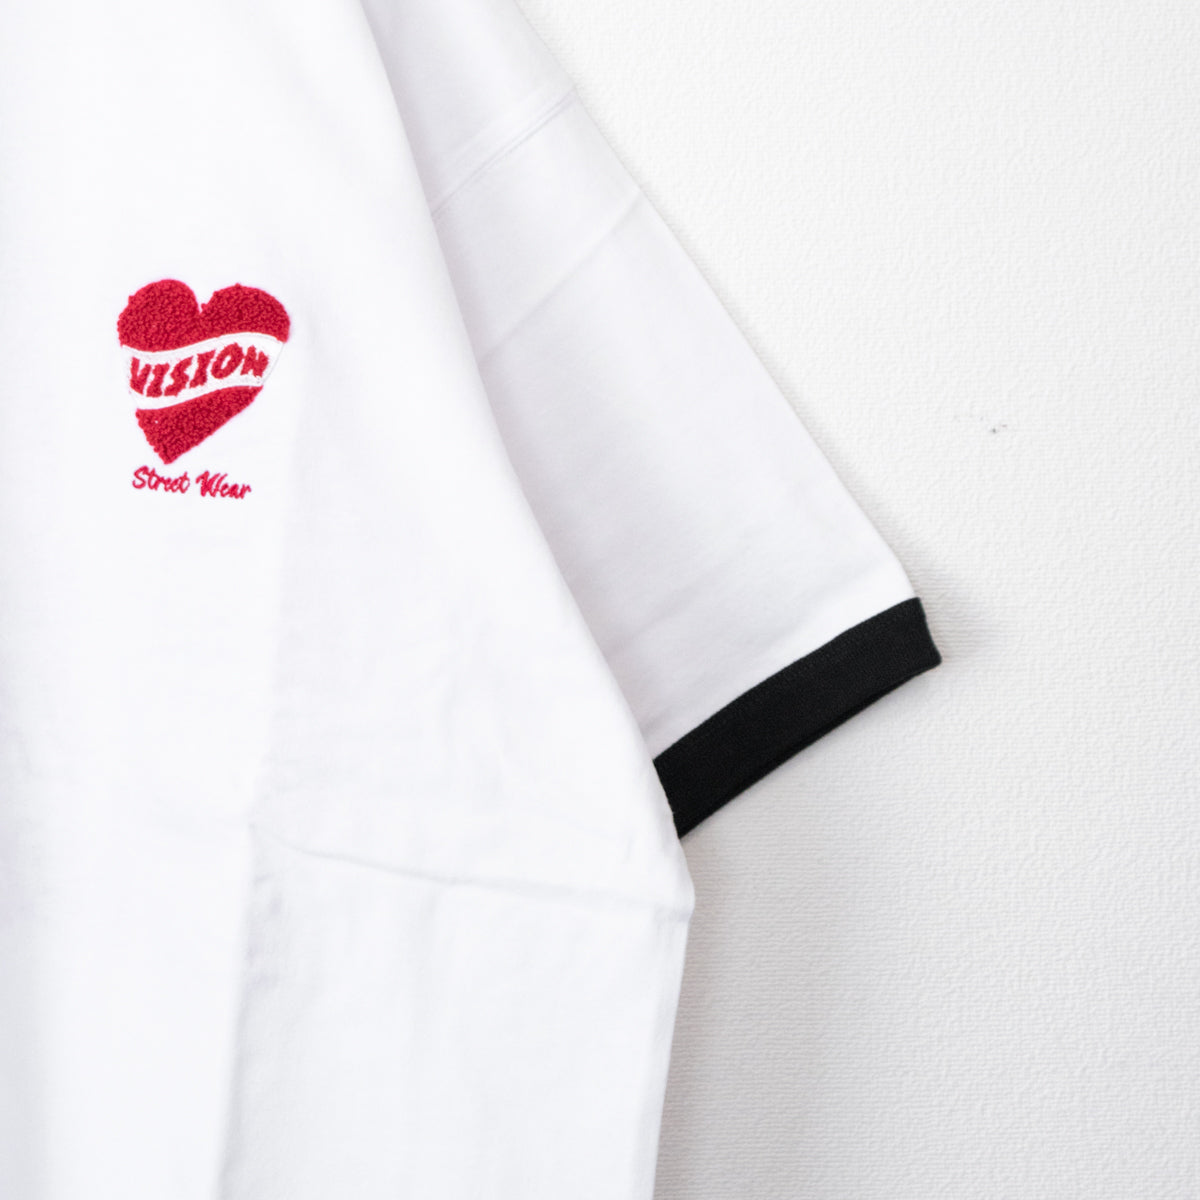 VISION STREET WEAR Heart Sagara Short Sleeve T-Shirt WHITE